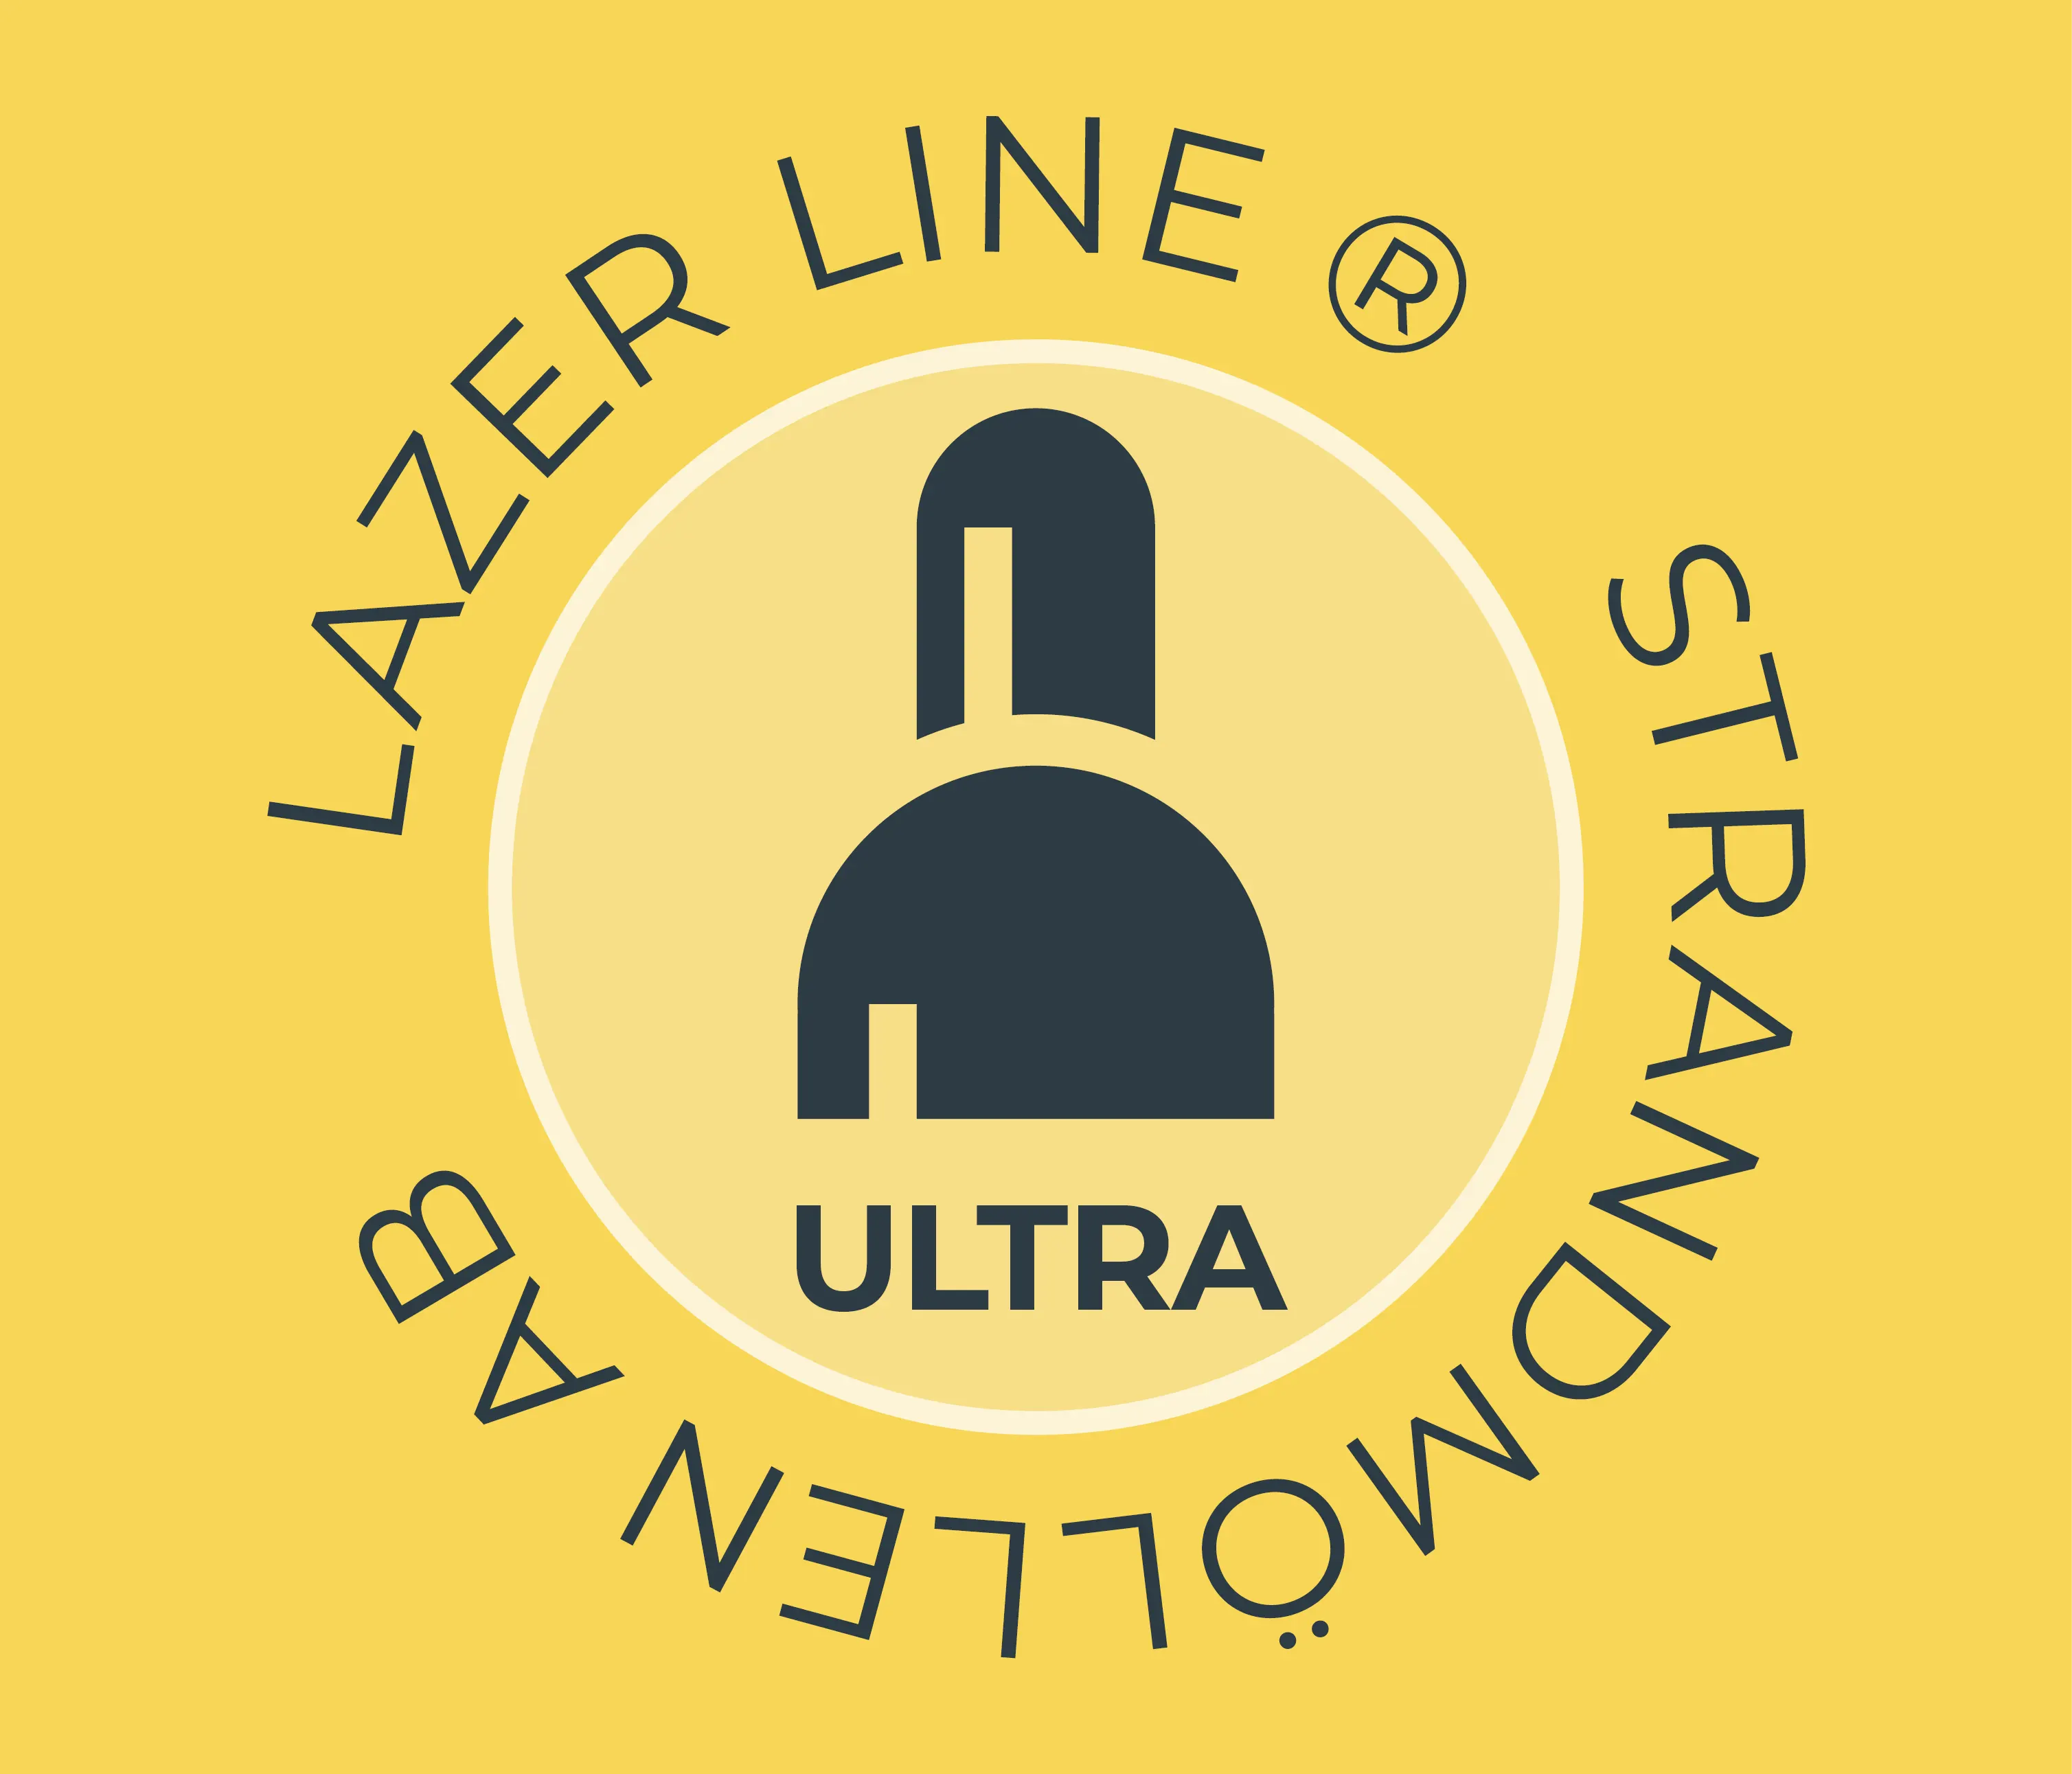 Lazer line ultra